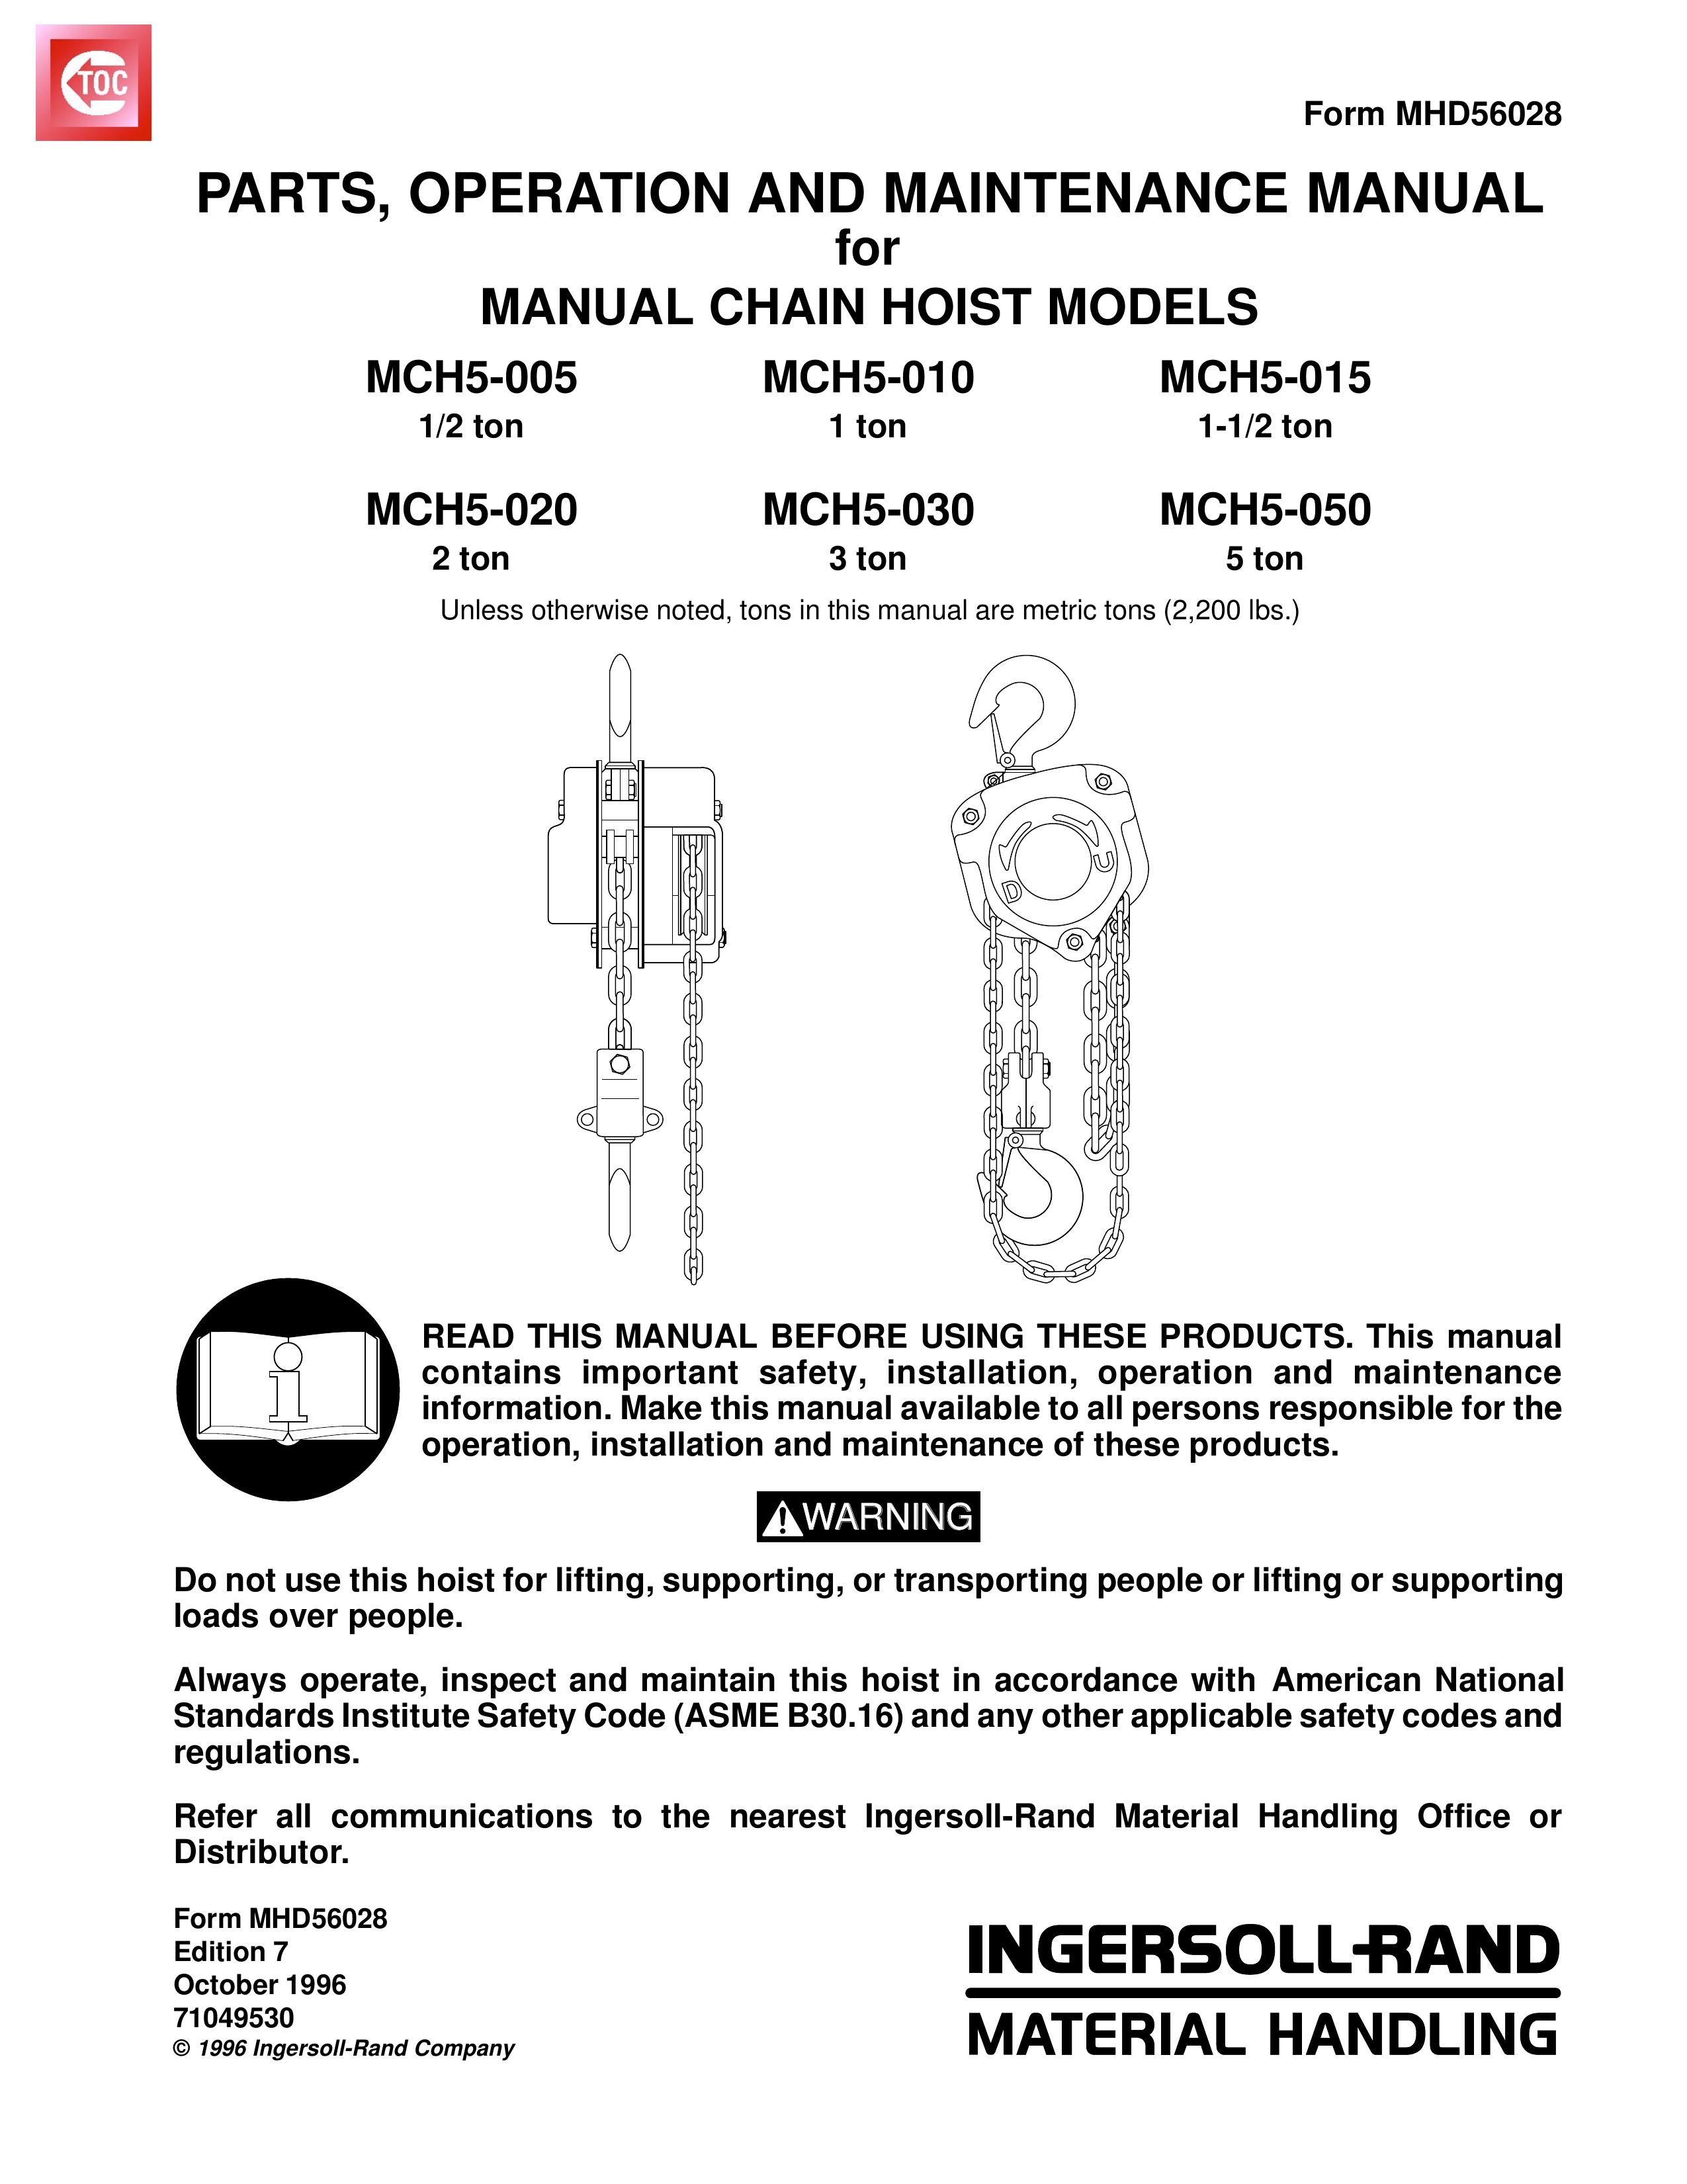 Ingersoll-Rand MCH5-010 Digital Photo Keychain User Manual